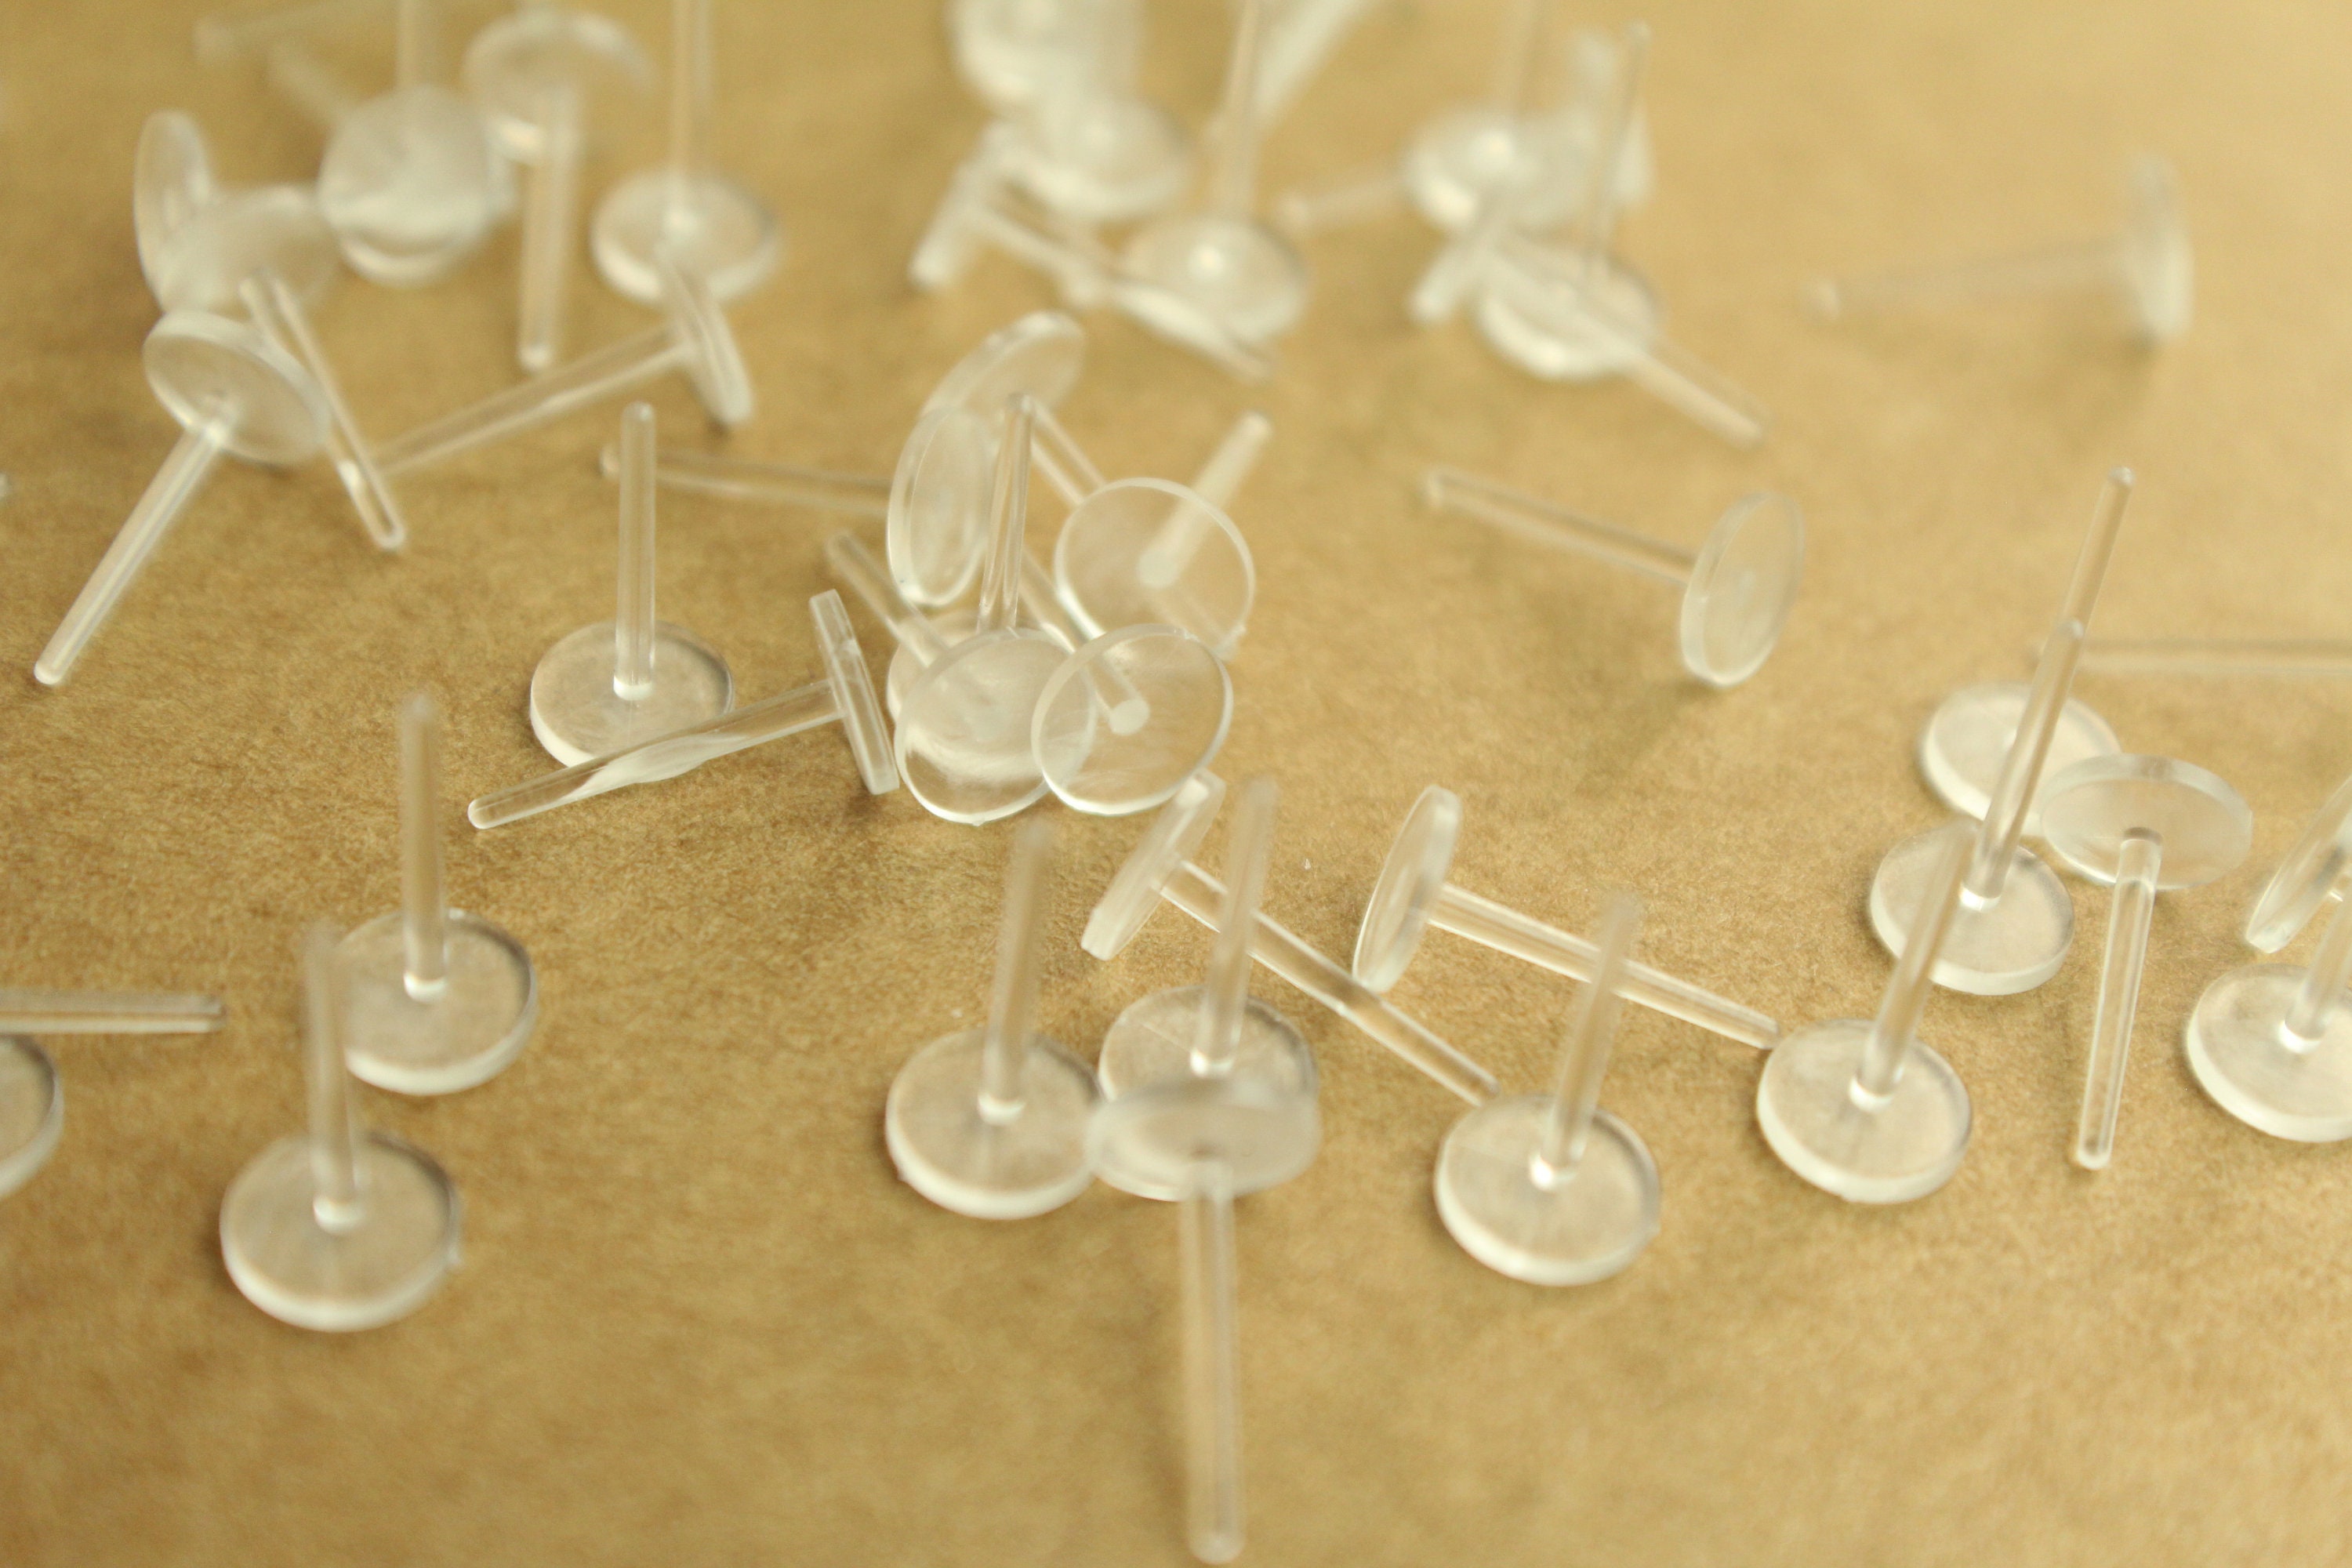 96 Total: 48 Clear Plastic French Hooks & 48 Plastic Earring Post